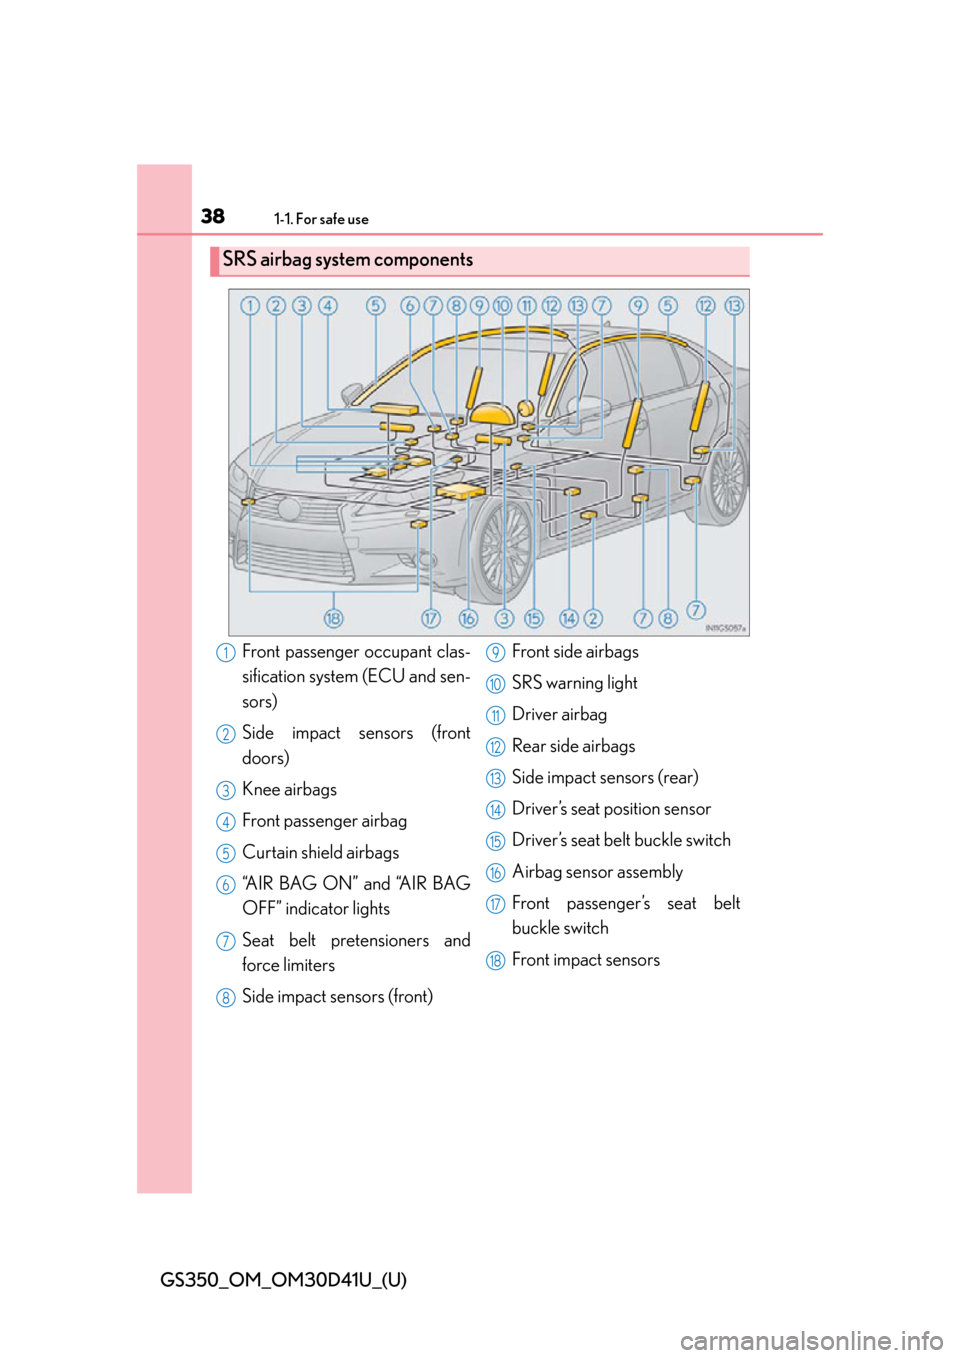 Lexus GS350 2014  Do-it-yourself maintenance / LEXUS 2014 GS350  (OM30D41U) Owners Guide 381-1. For safe use
GS350_OM_OM30D41U_(U)
SRS airbag system components
Front passenger occupant clas-
sification system (ECU and sen-
sors)
Side impact sensors (front
doors)
Knee airbags
Front passeng